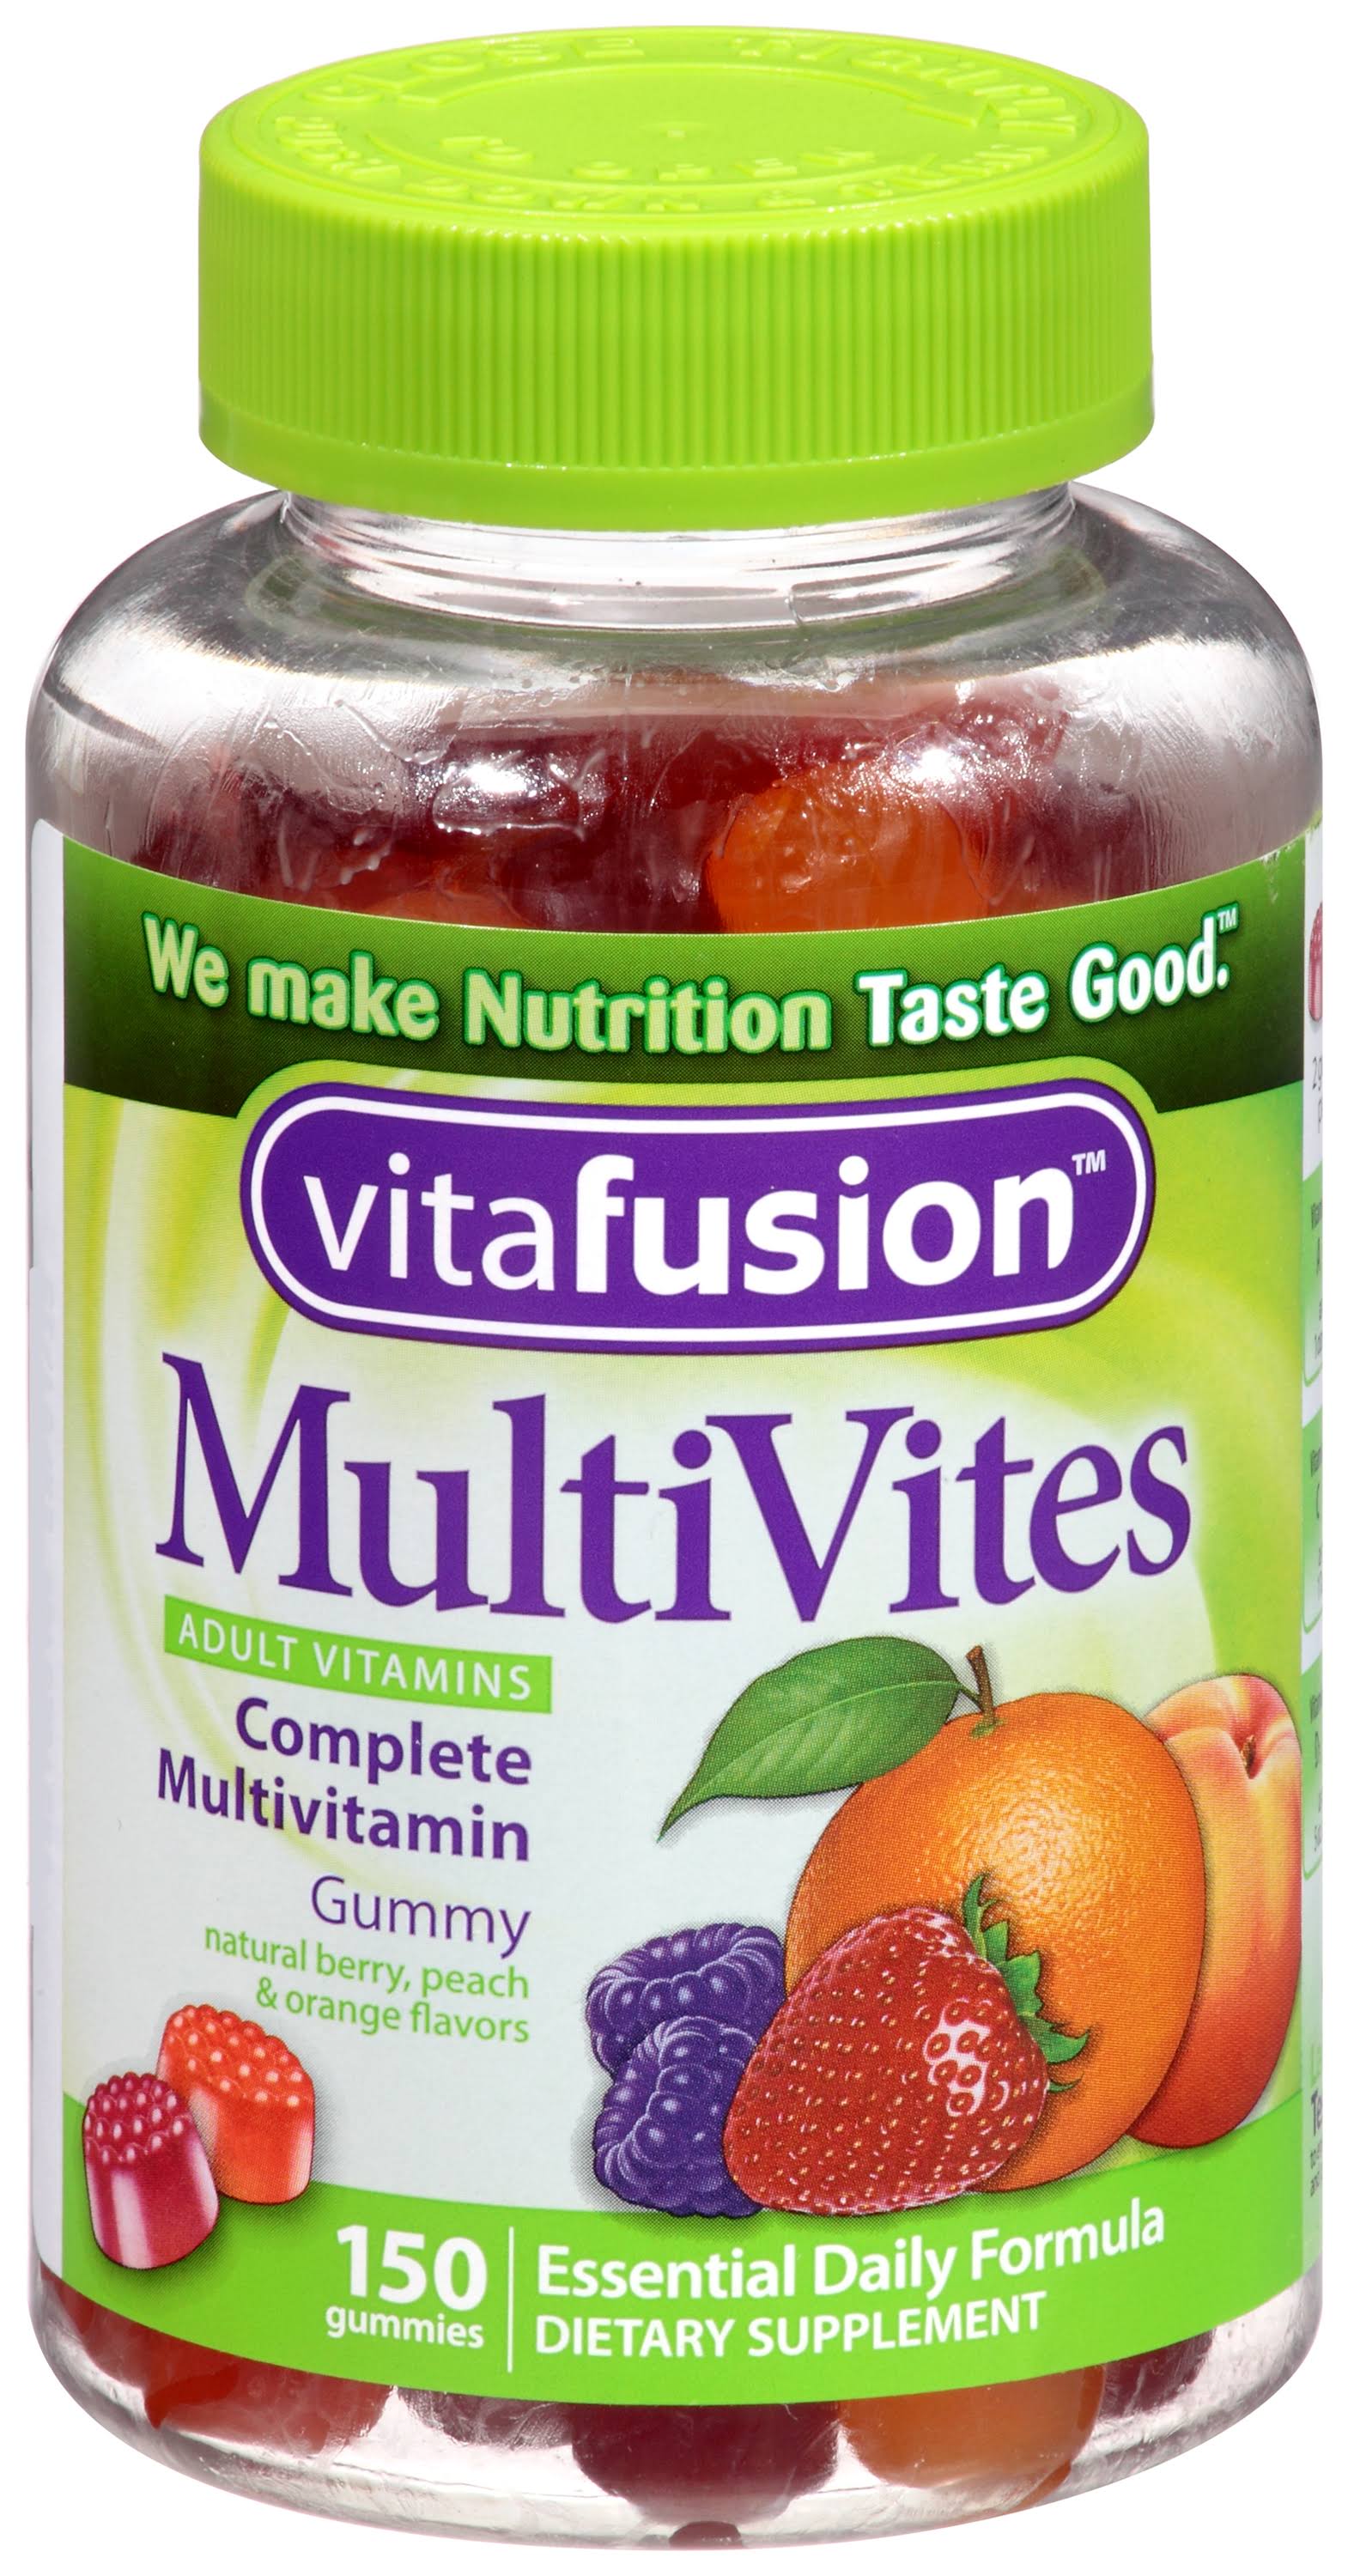 Vitafusion Multi-vite Gummy Vitamins For Adults - 150ct